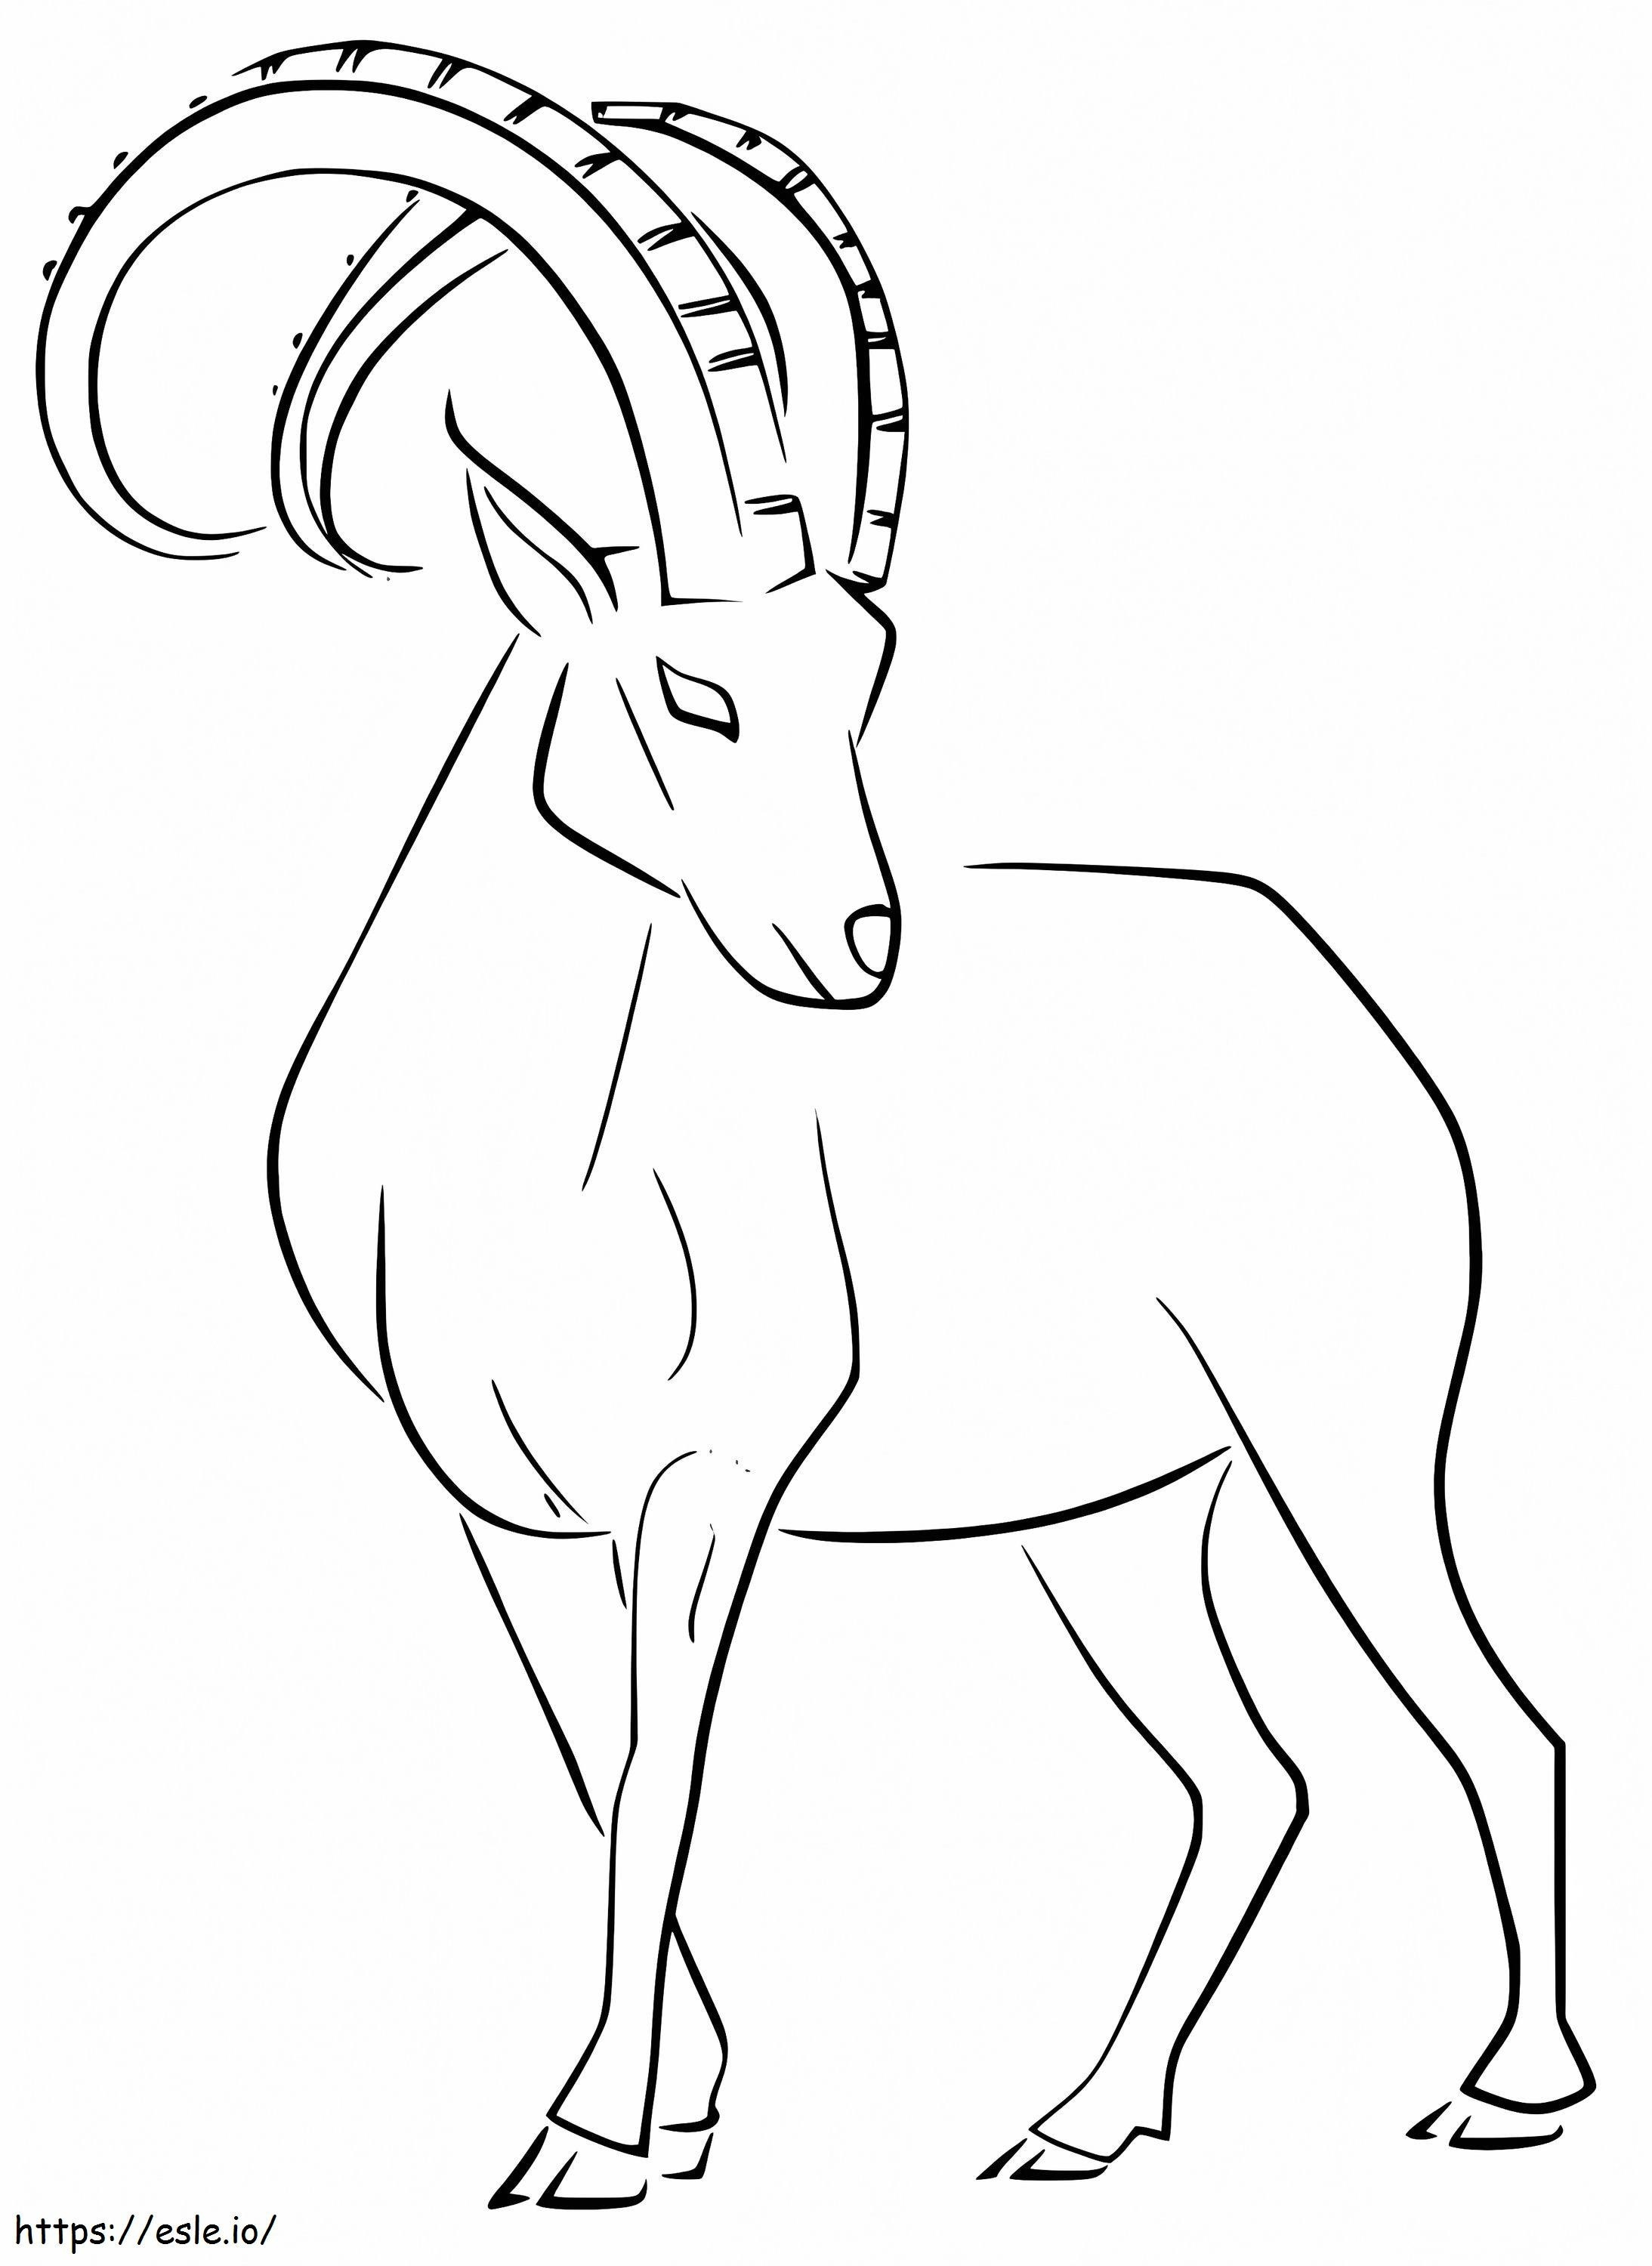 Ibex elegant de colorat